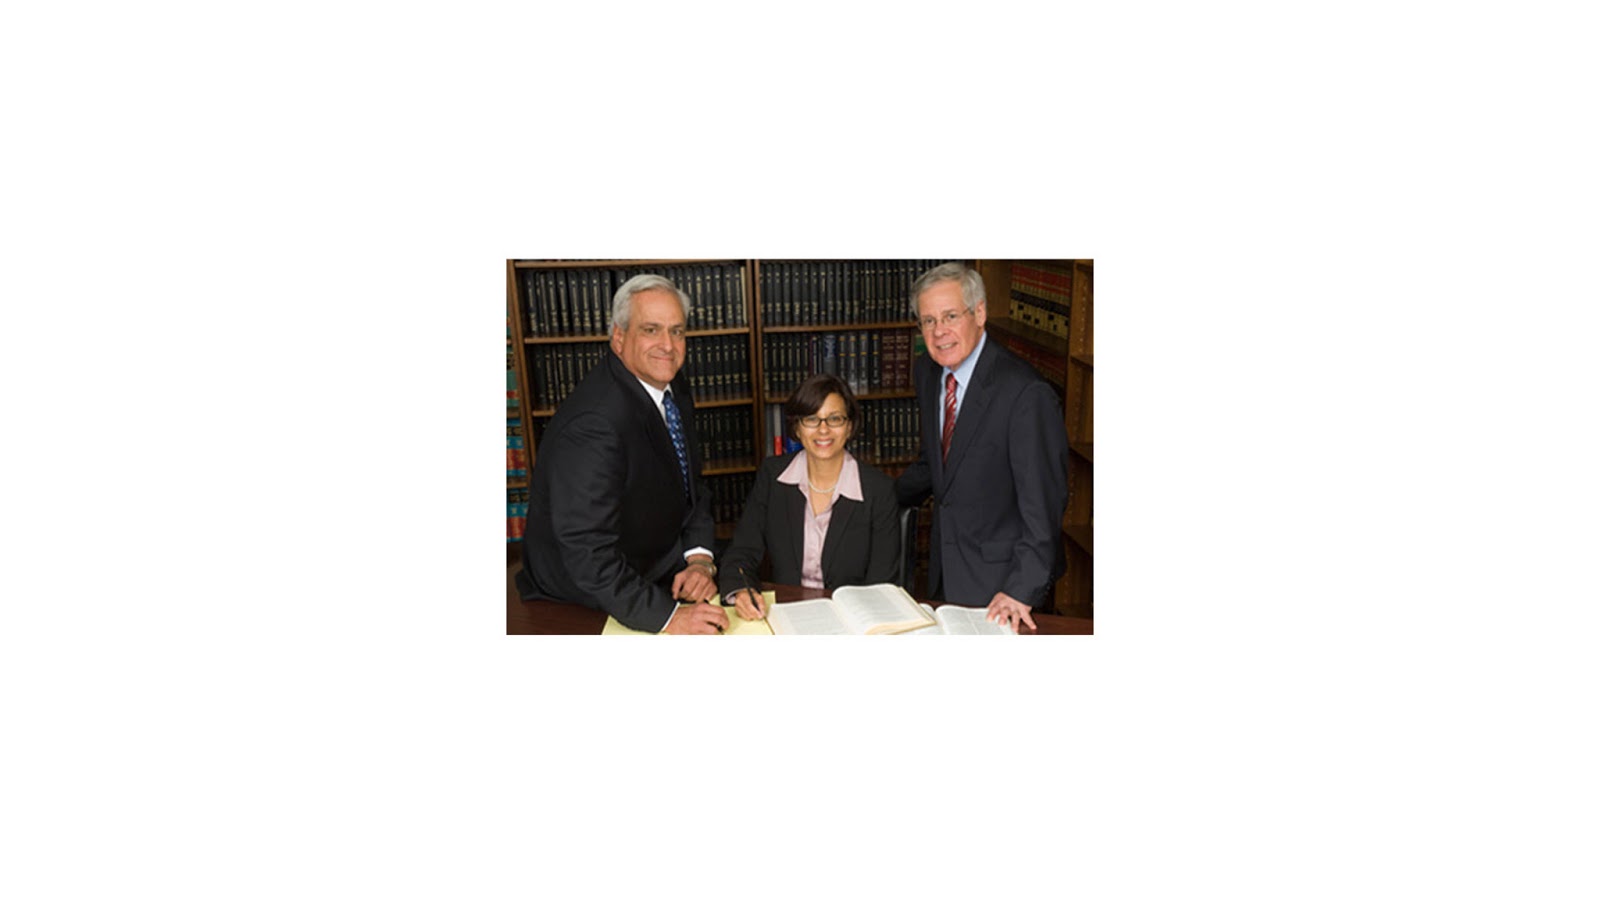 Photo of Polin, Prisco & Villafane in Glen Cove City, New York, United States - 1 Picture of Point of interest, Establishment, Lawyer